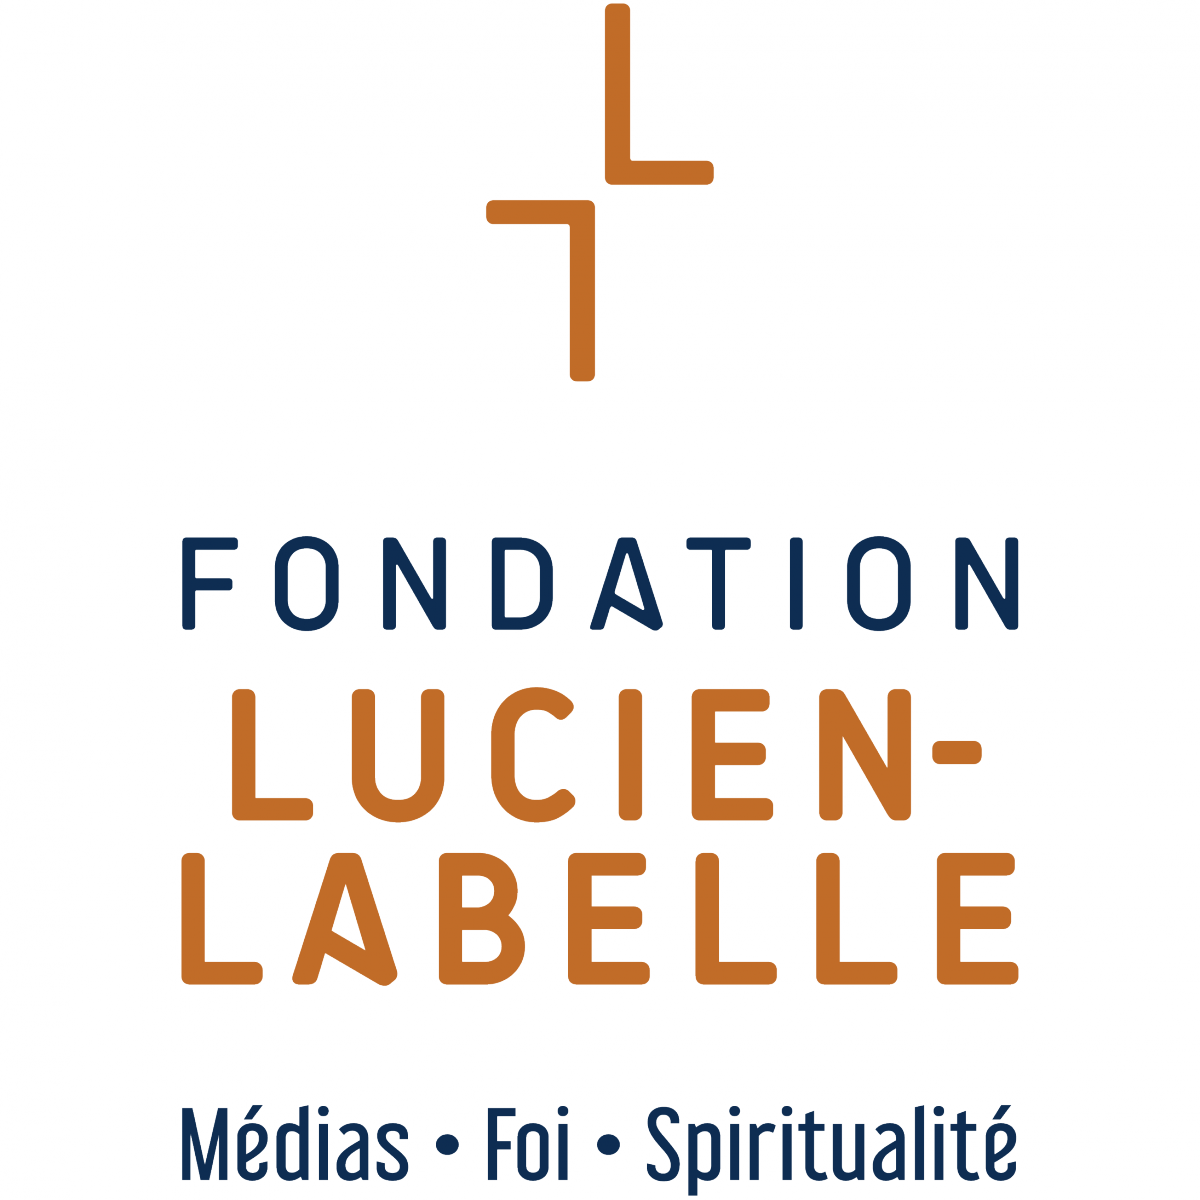 Fondation_Lucien-Labelle_logo_RGB_vsF_aout_20_300DPI.png